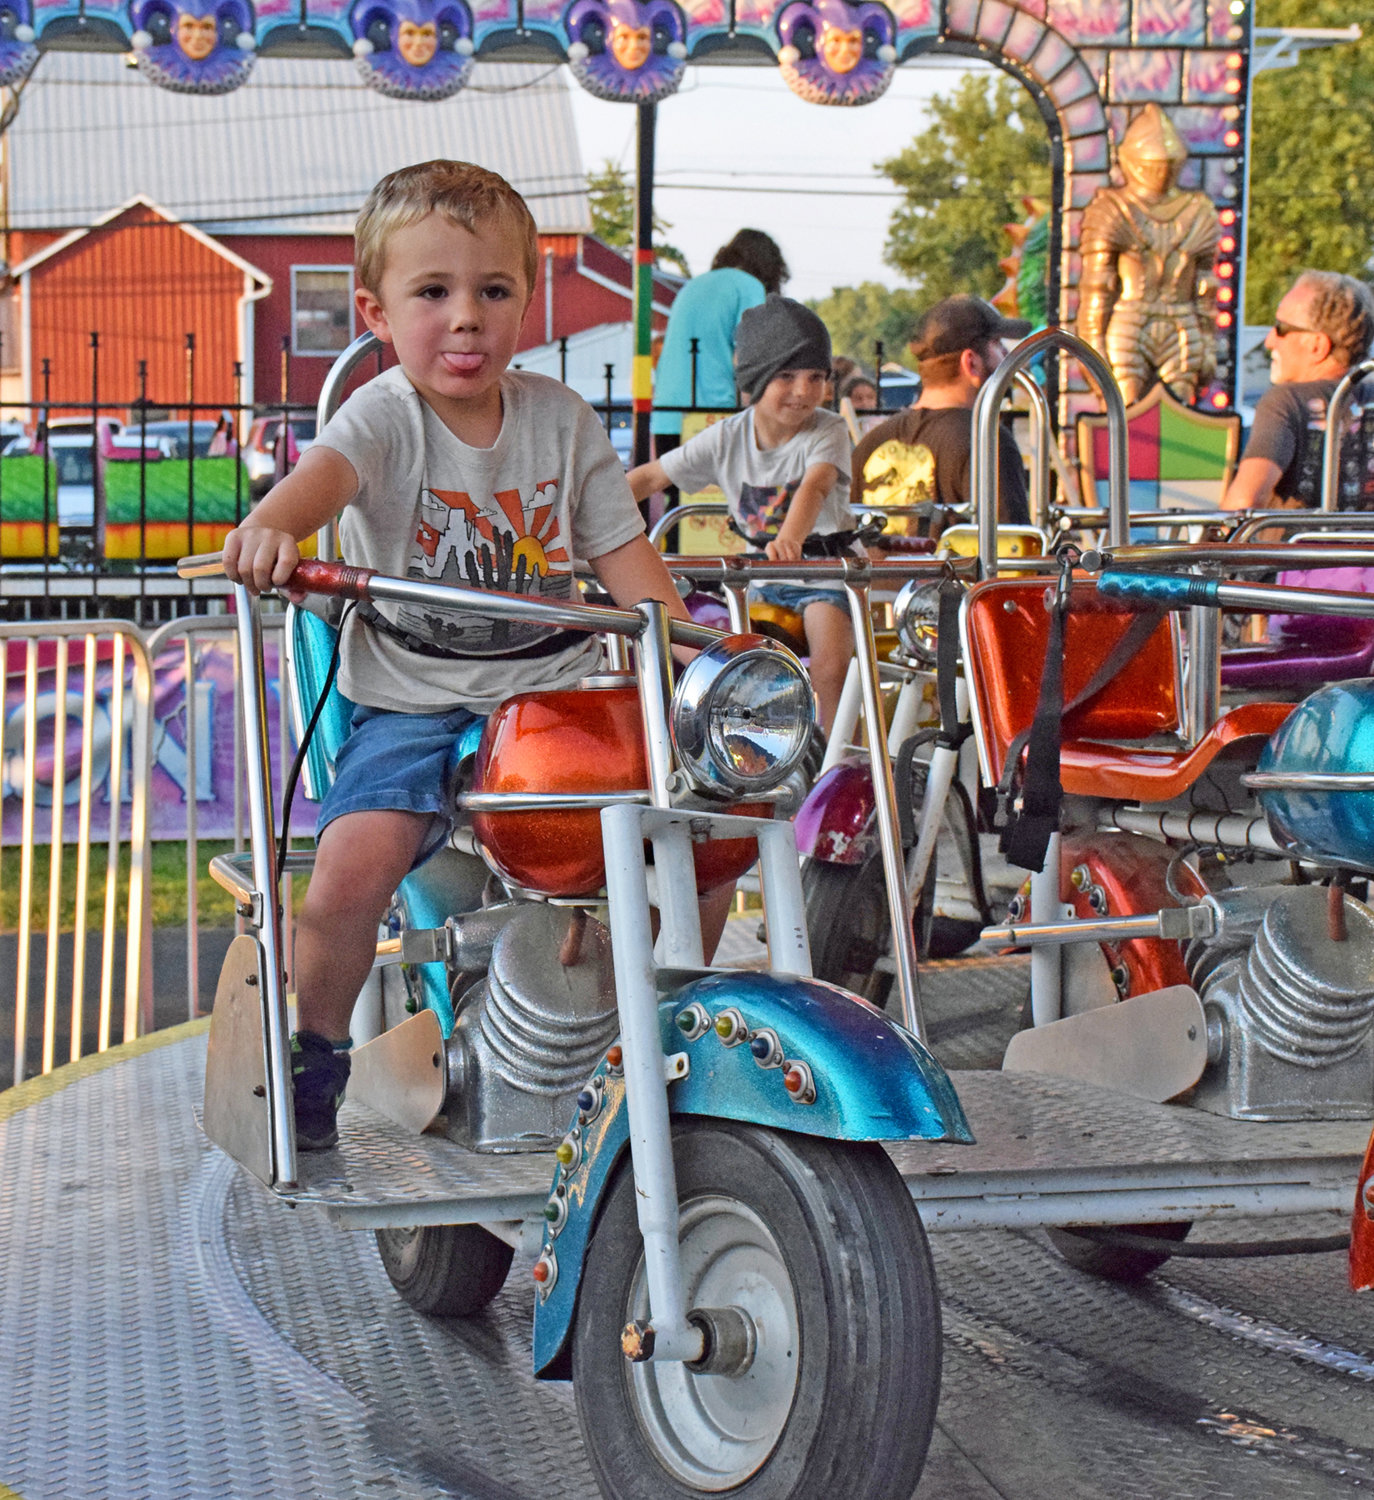 Jaxson Vasey of Perkasie drives a cycle at the Fireman’s Fair in Dublin last weekend.